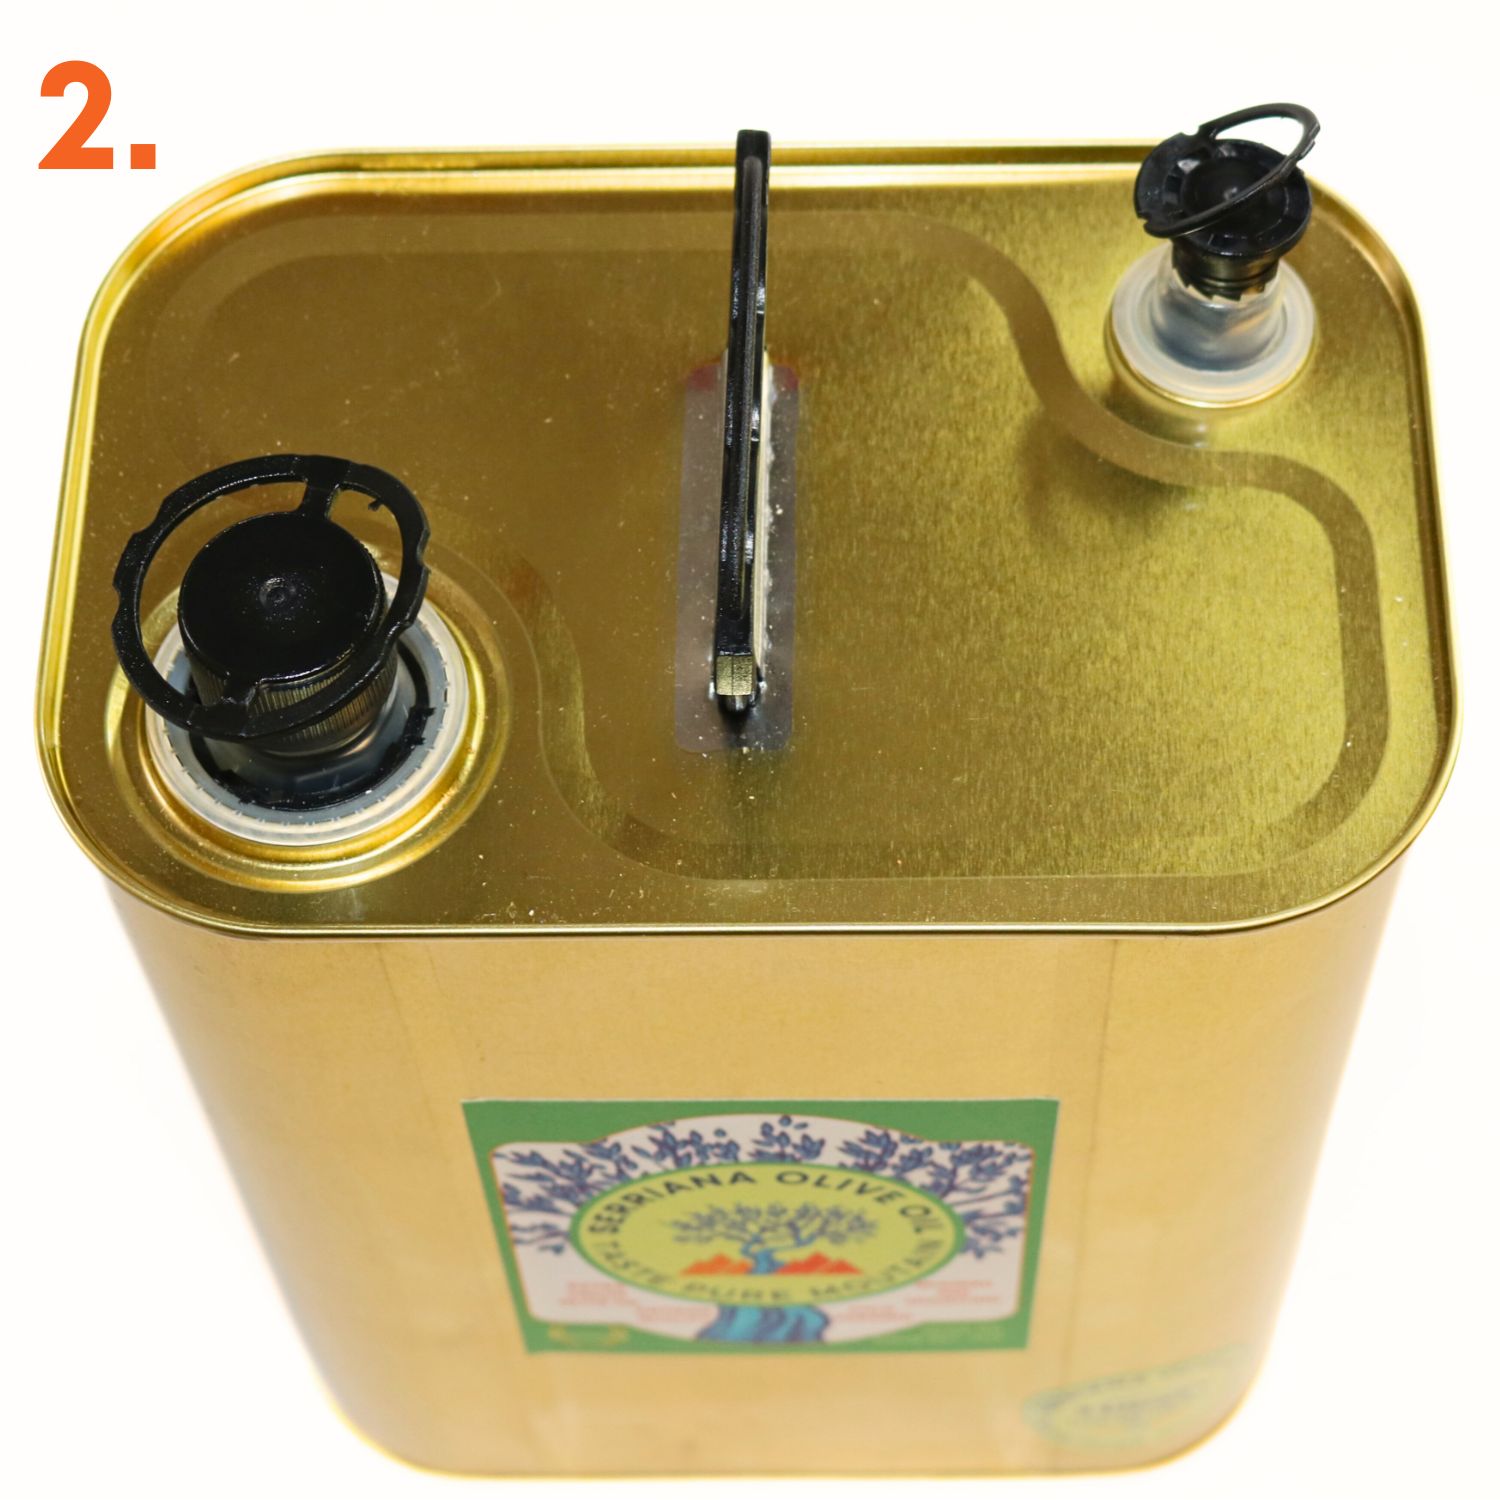 Serriana olive oil - lifting the 3 litre refill tin caps